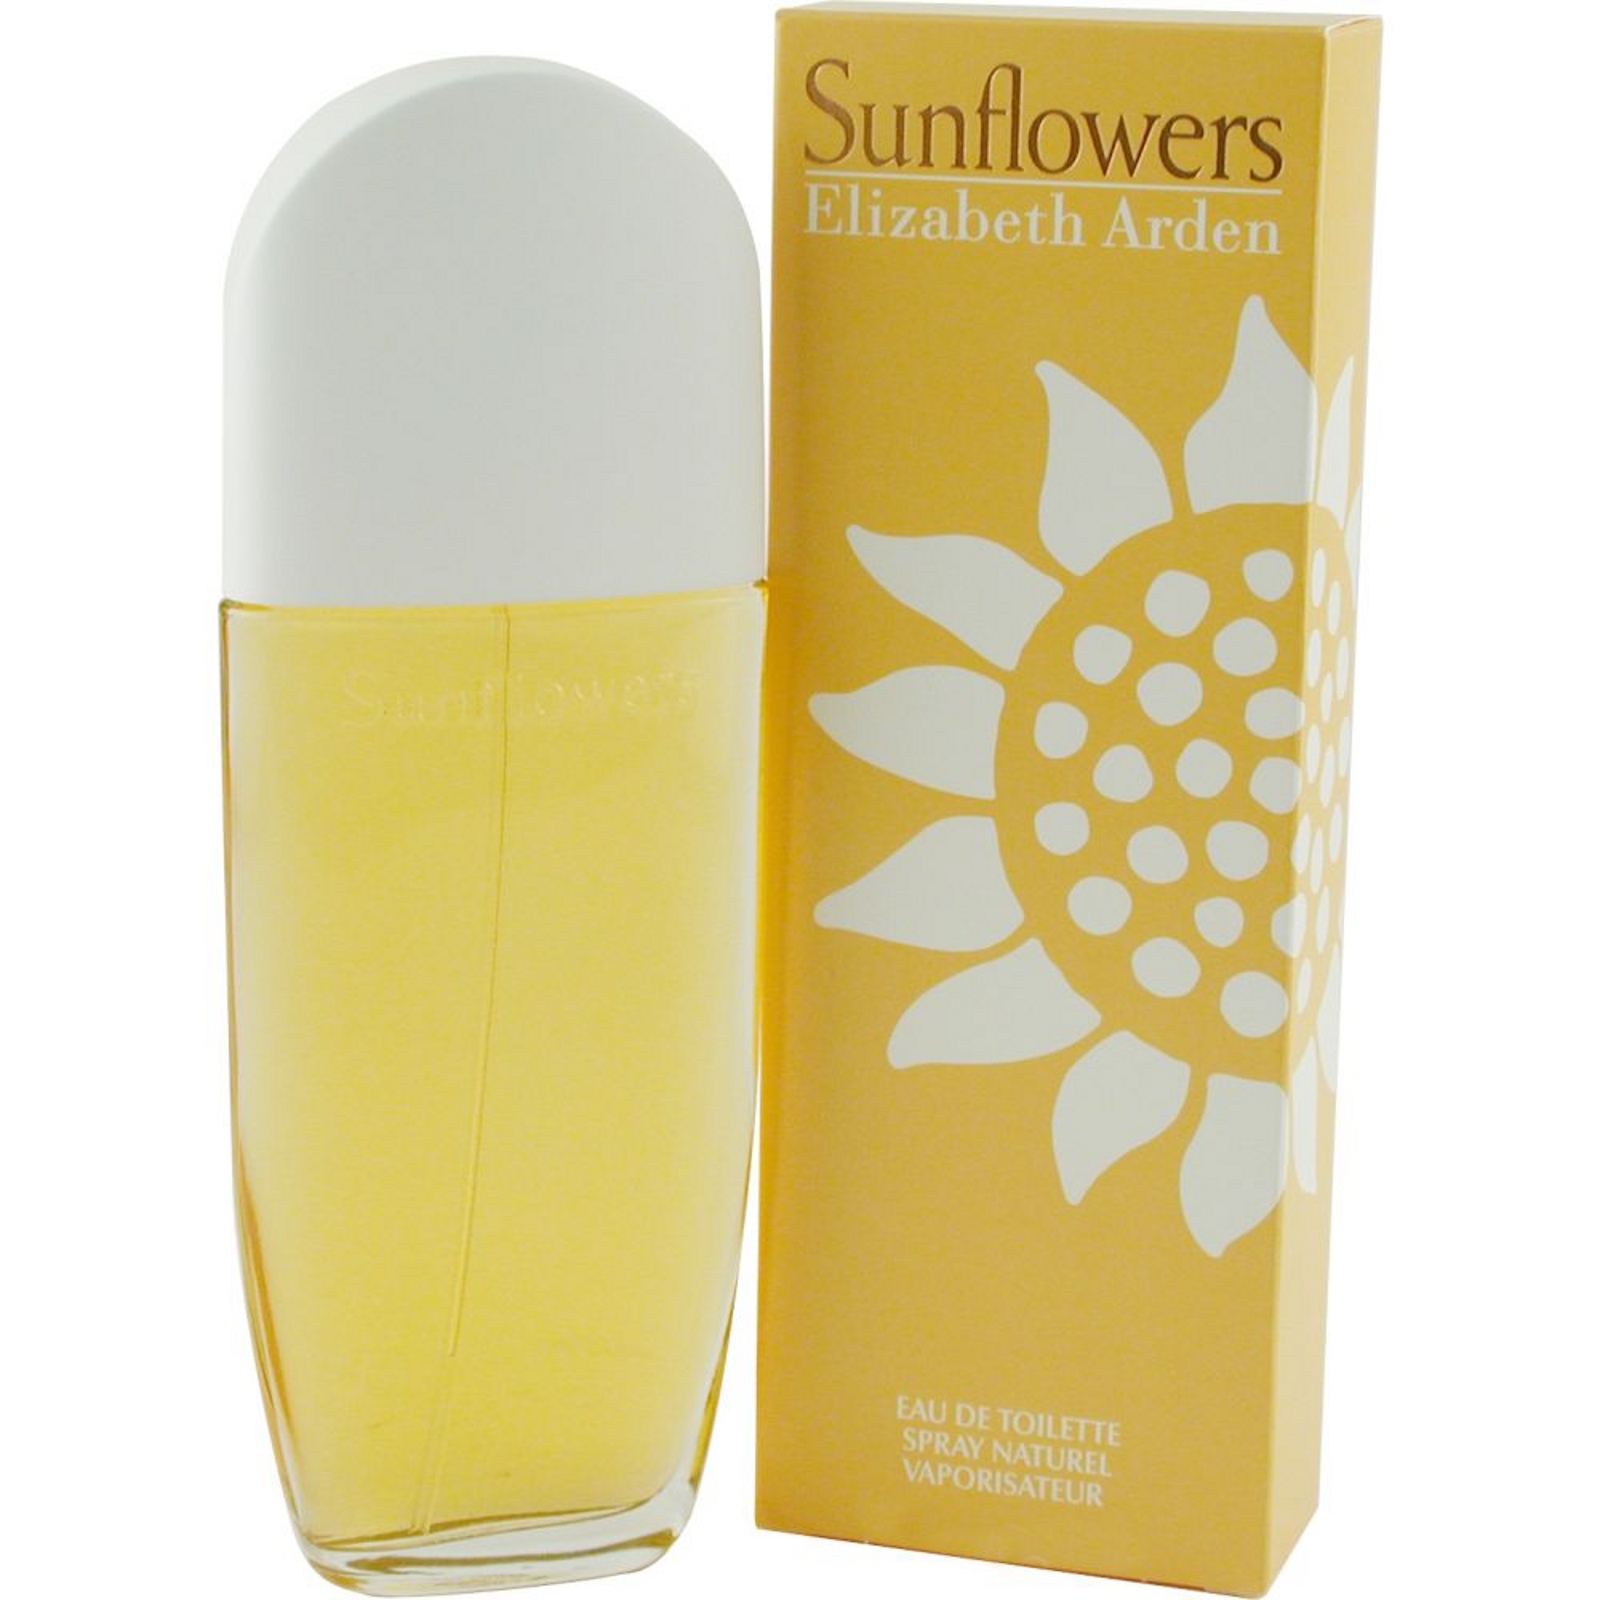 Sunflowers  by Elizabeth Arden EDT Spray 3.3 Oz for Women